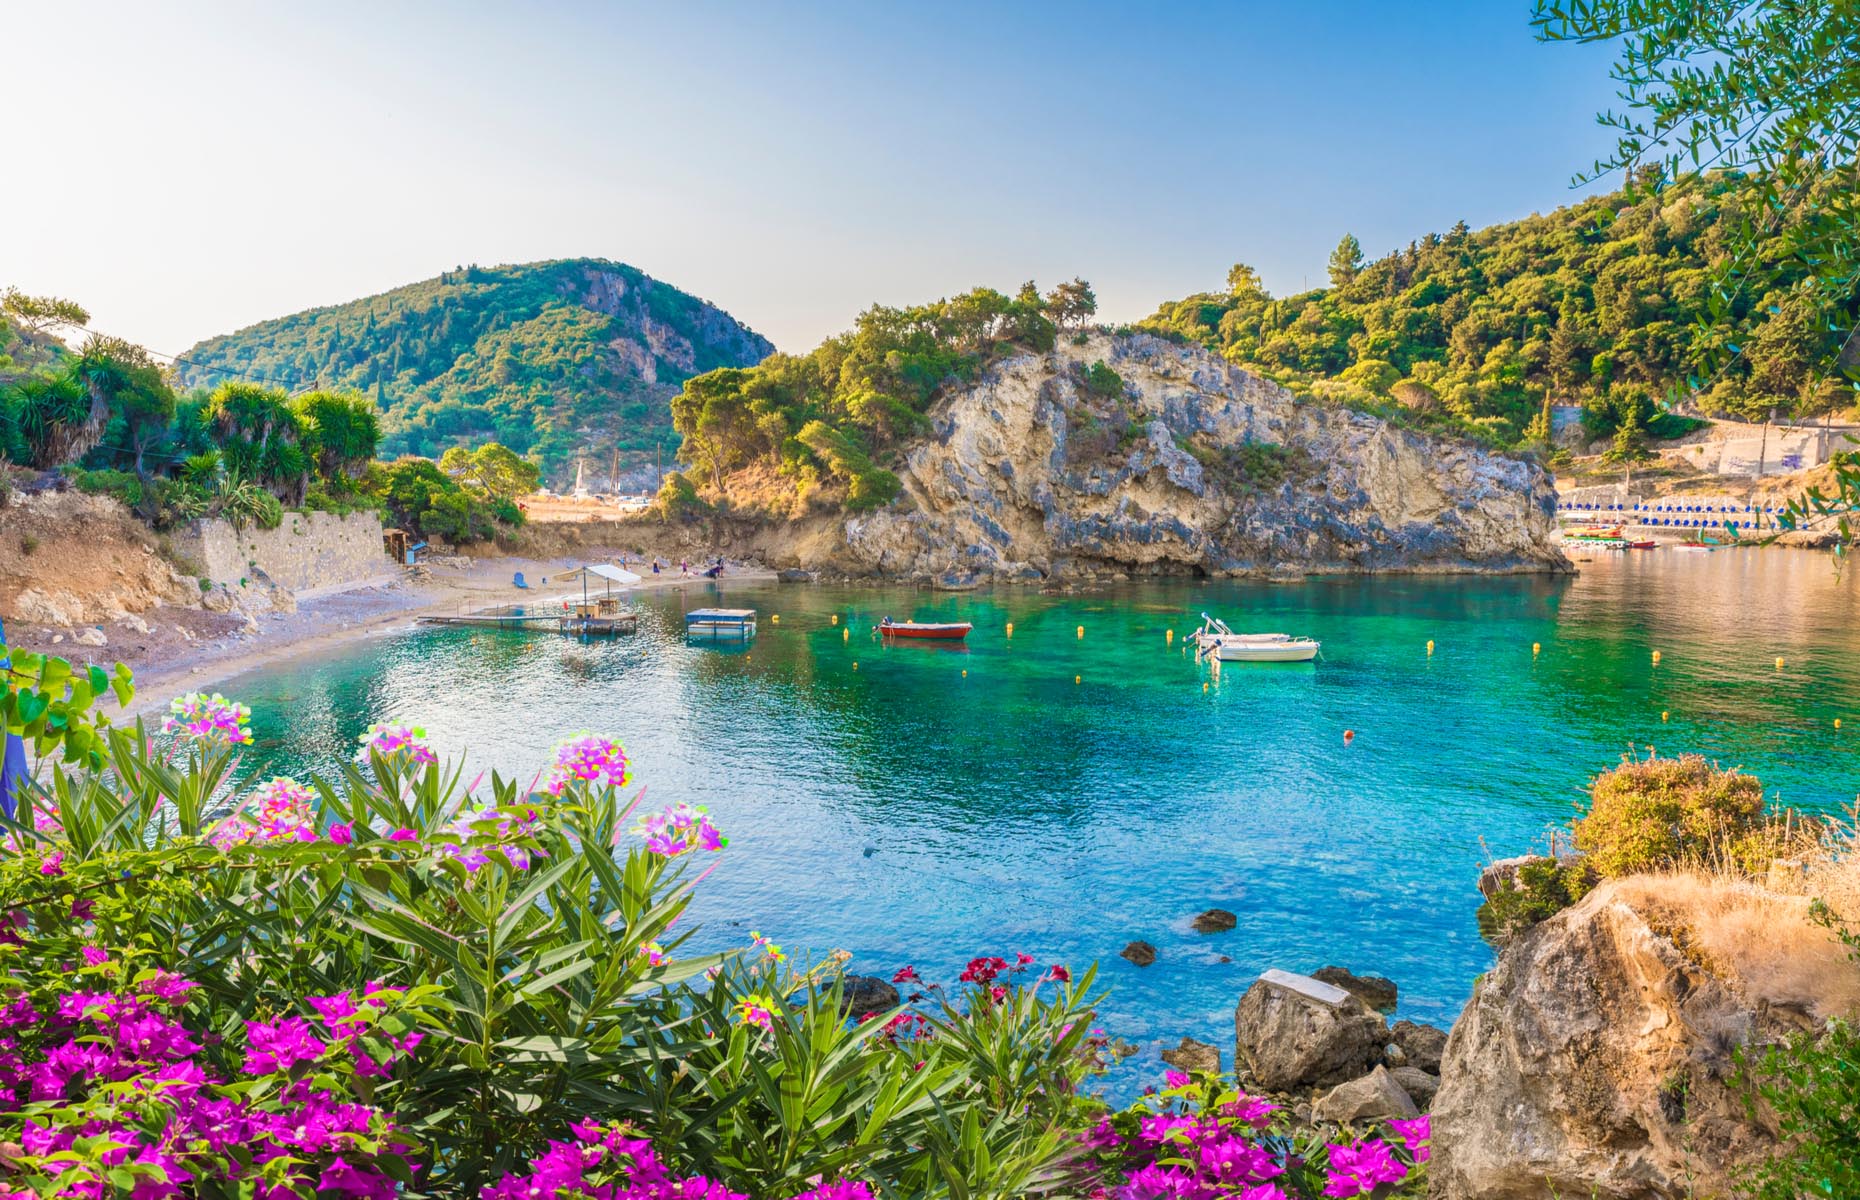 Corfu, Greece (Image: Balate Dorin/Shutterstock)